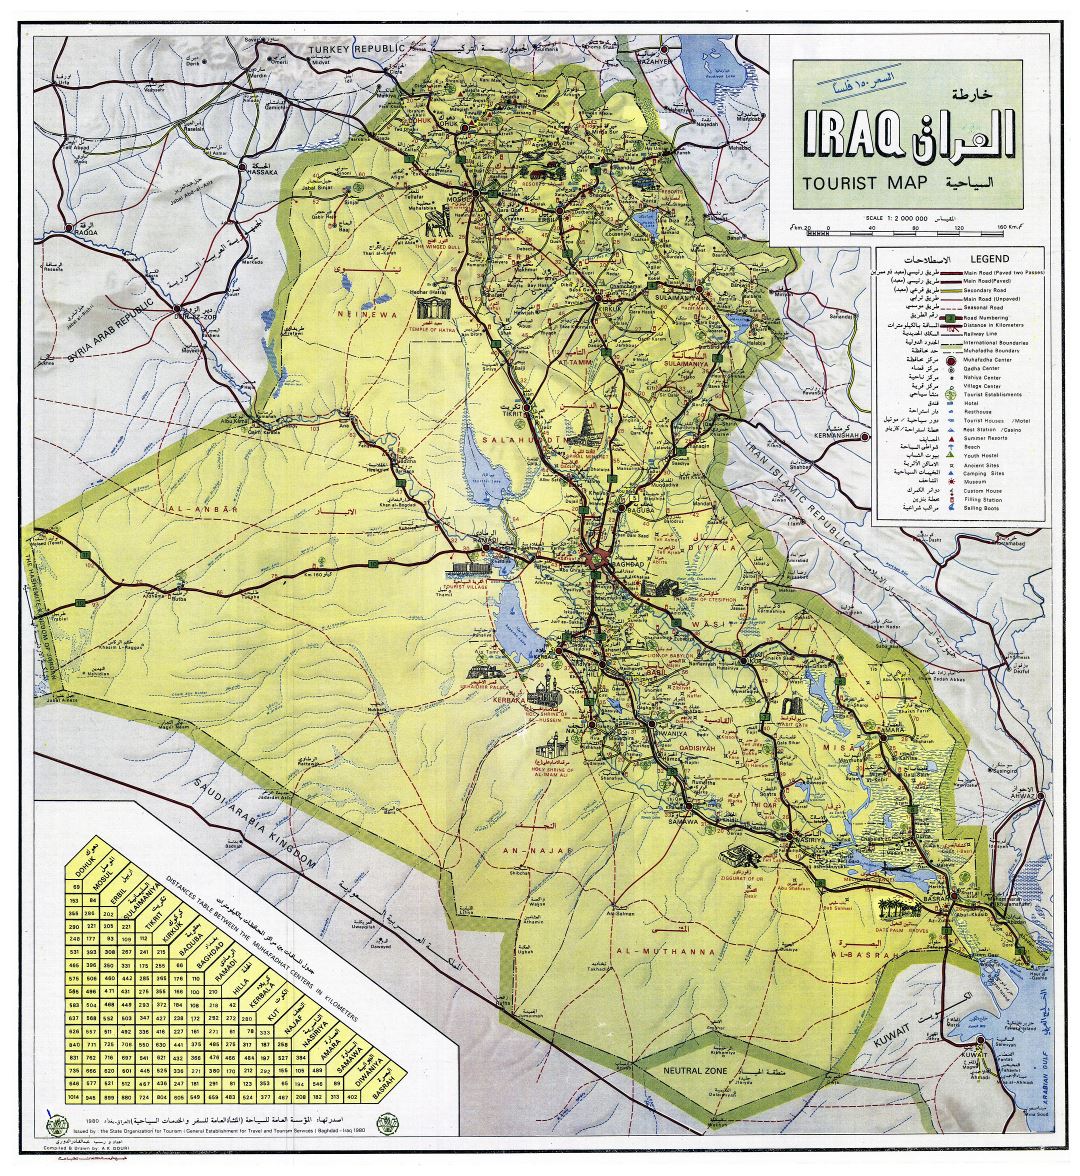 Large scale tourist map of Iraq